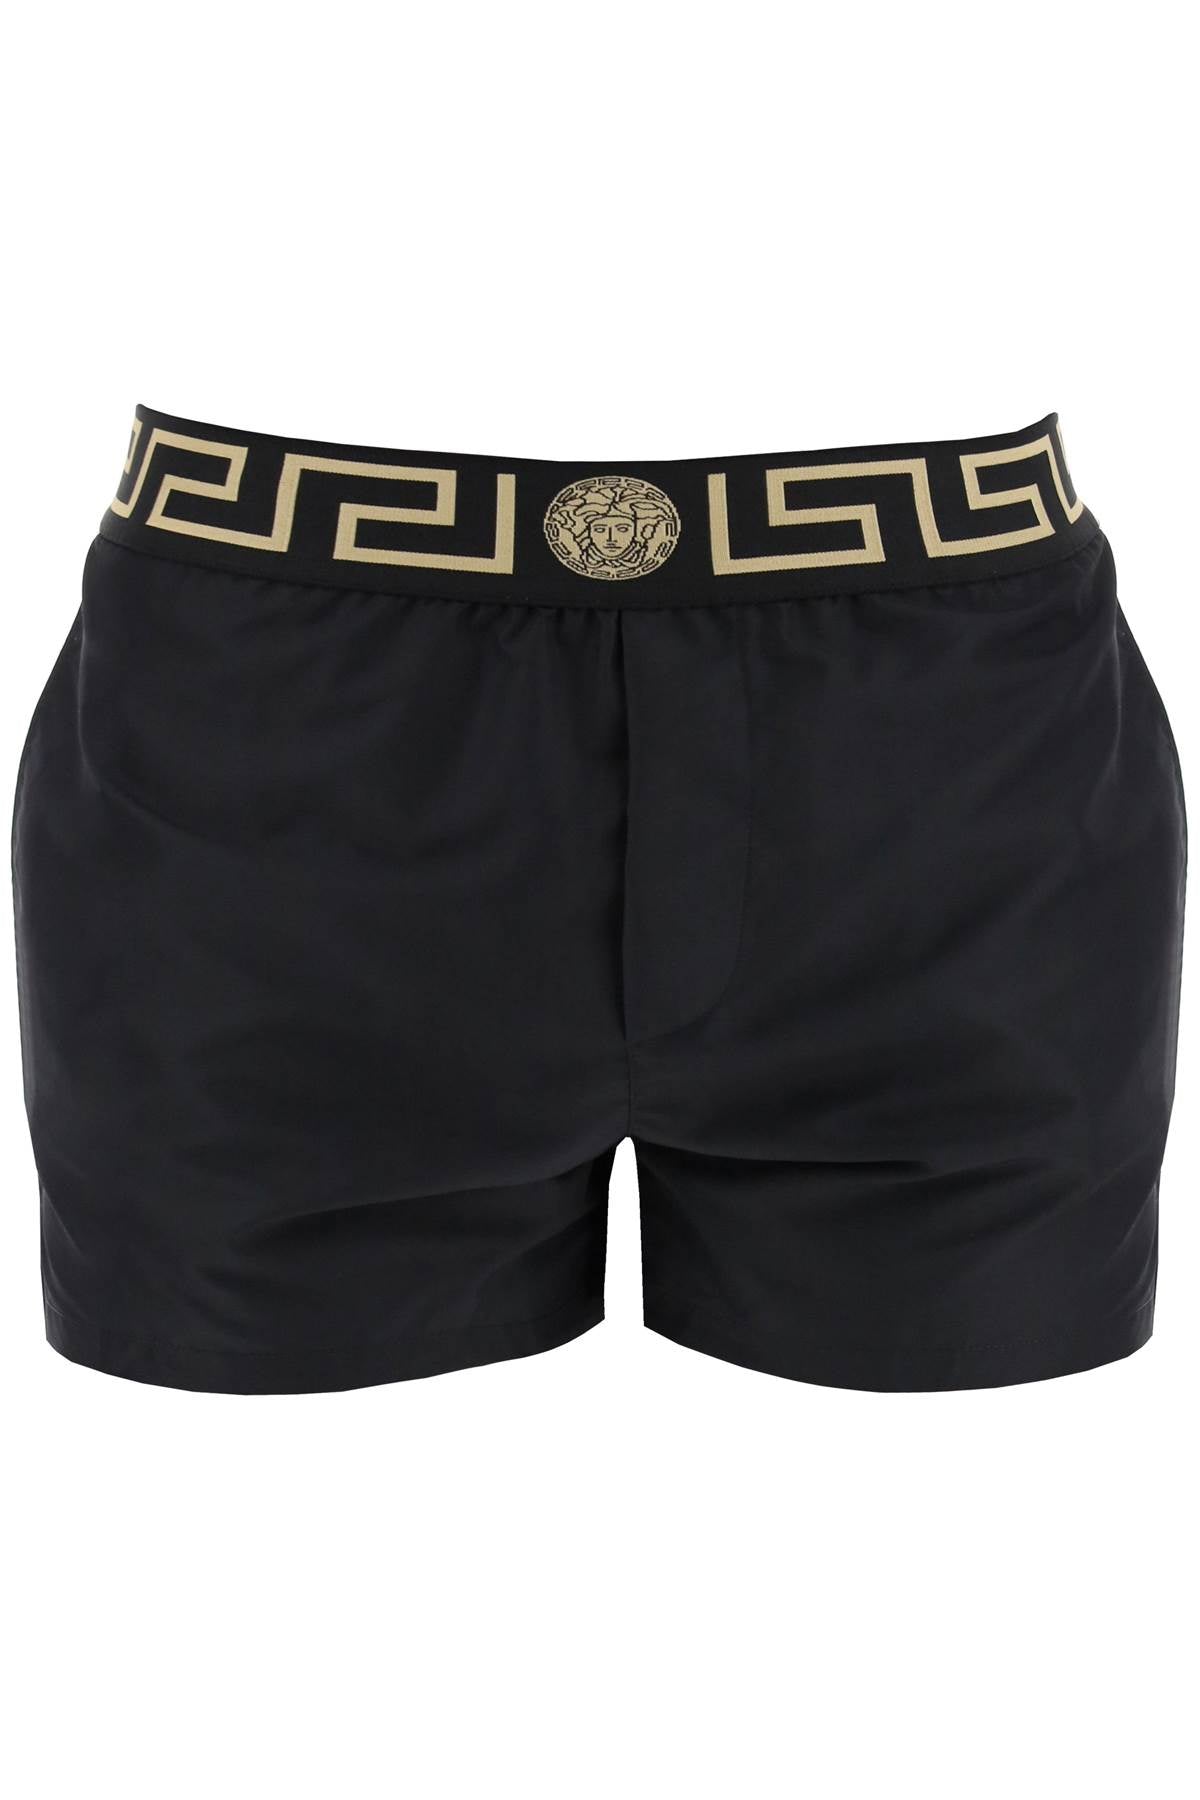 Versace 希臘海百慕達短褲 ABU01022 A232415 黑金希臘鑰匙